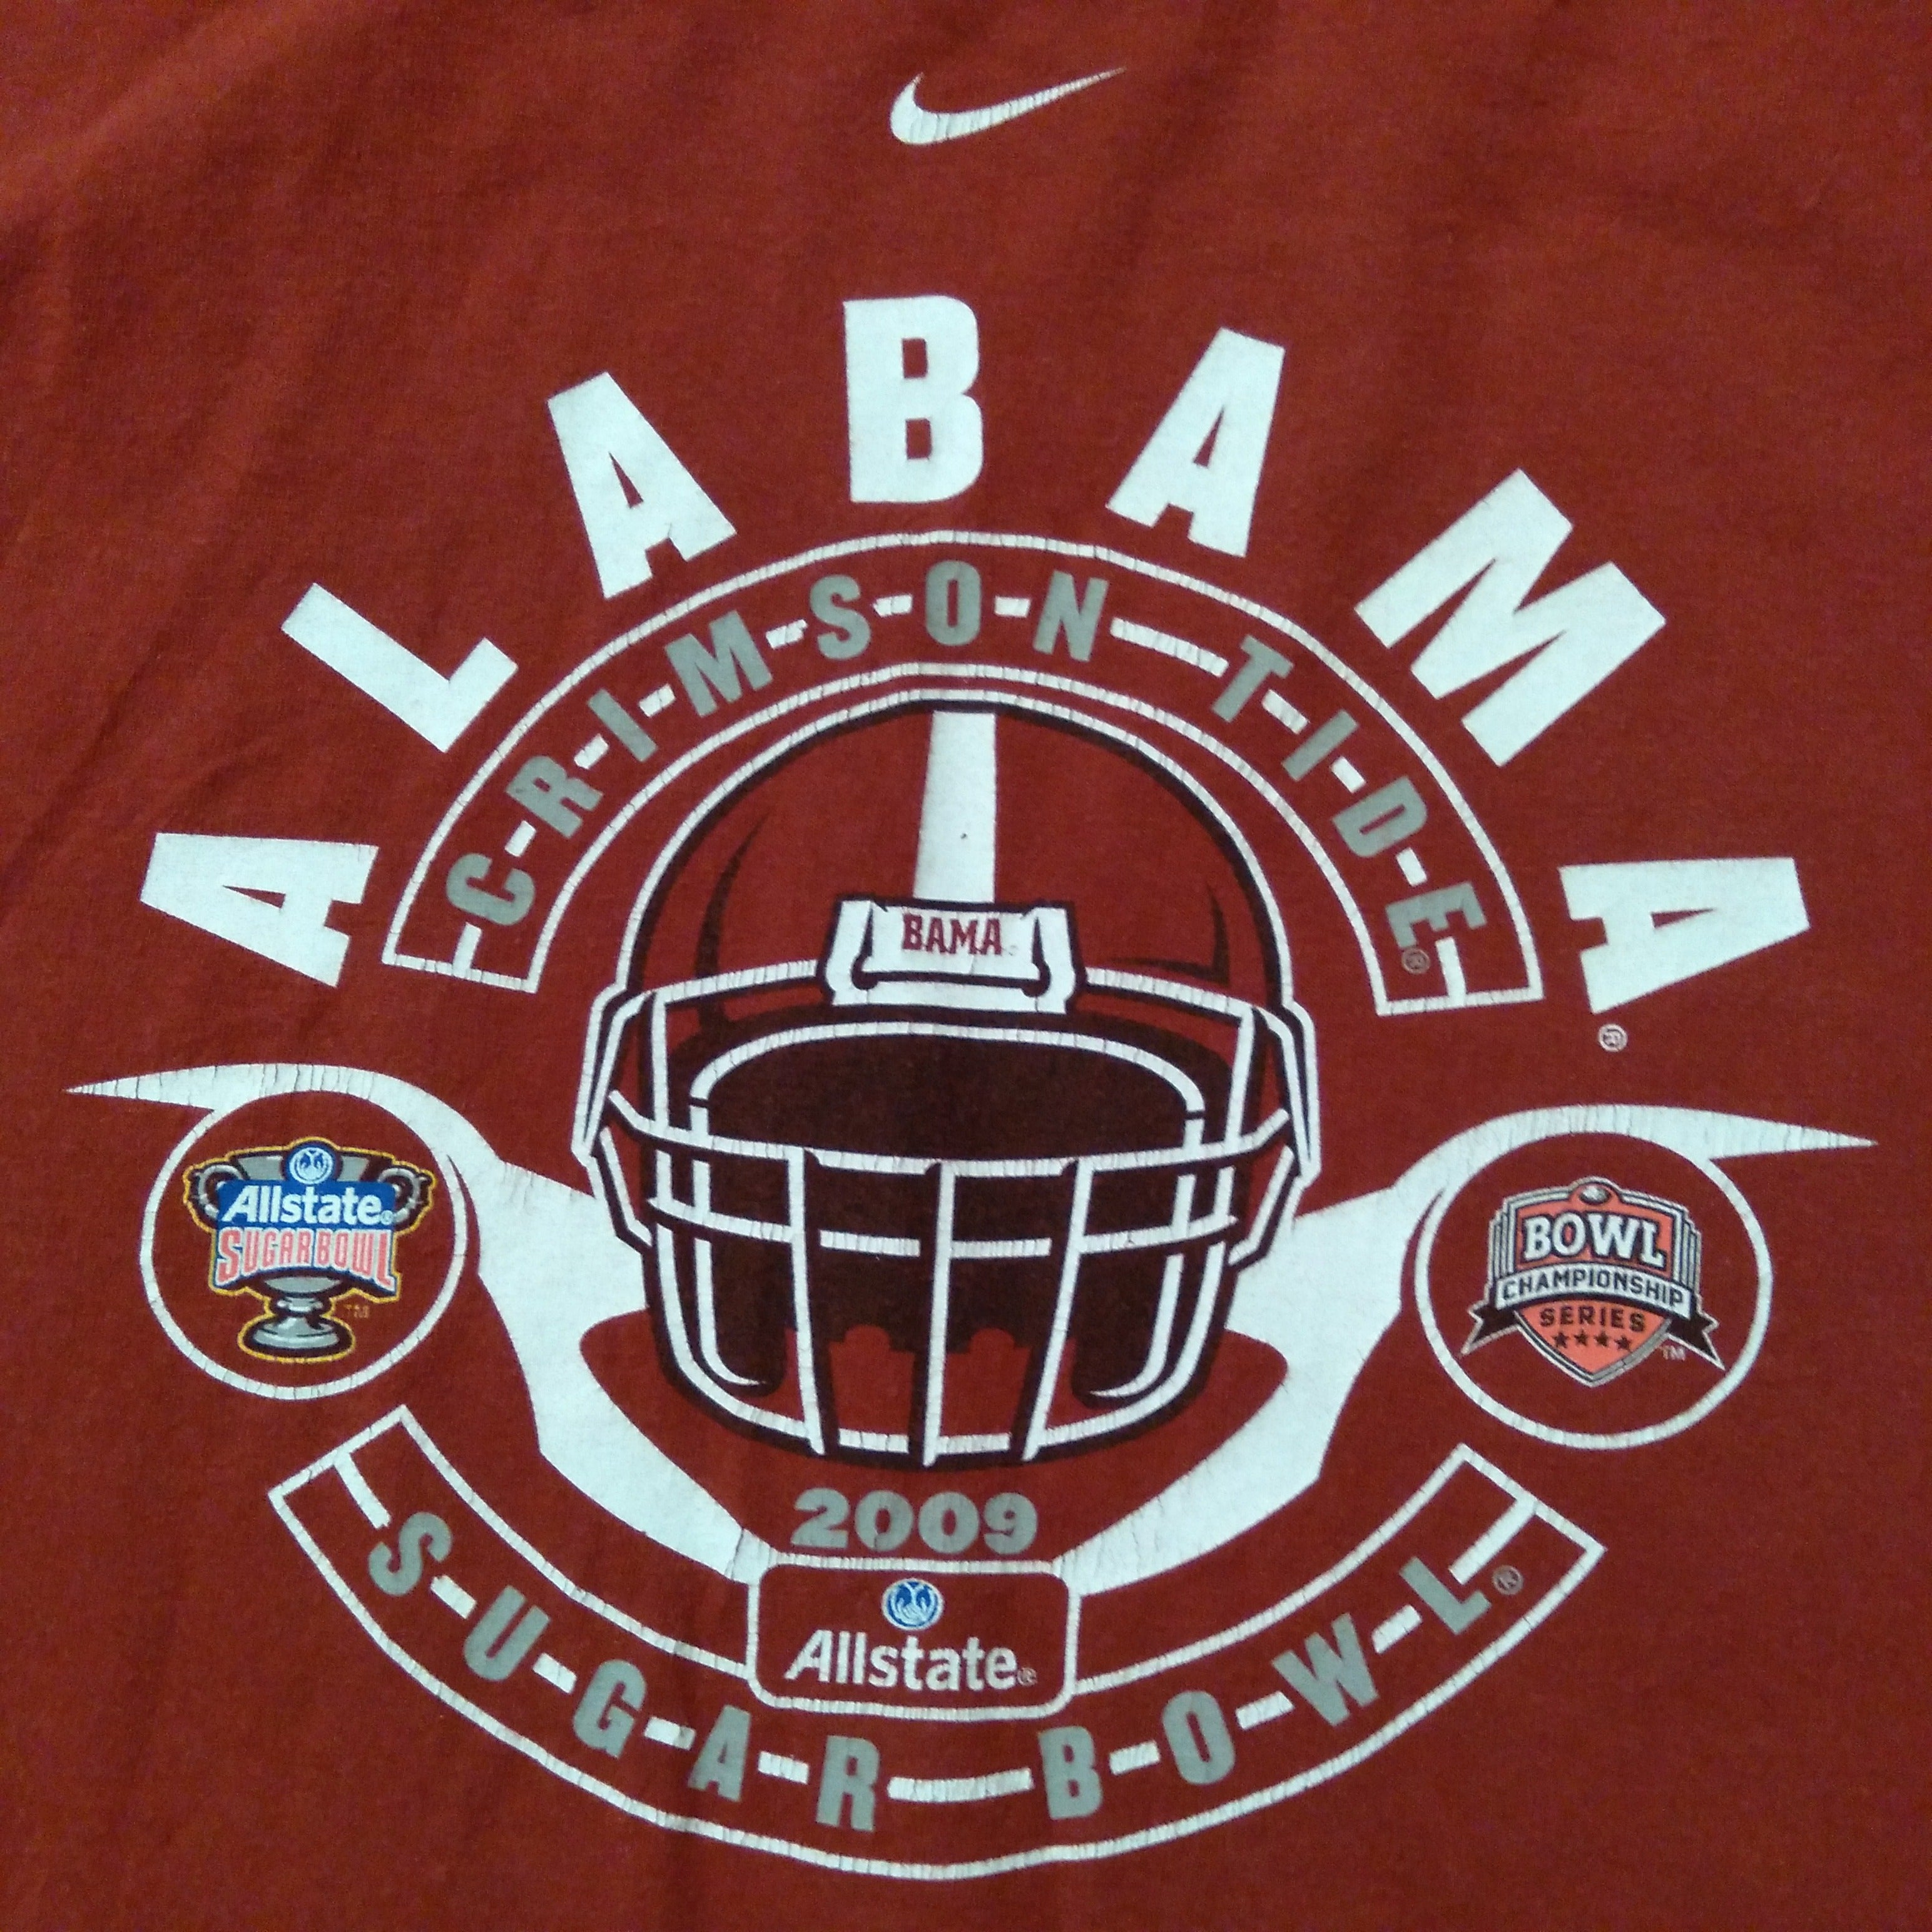 Bama, Alabama Nike Men's Dri-fit Cotton Baseball Plate Tee